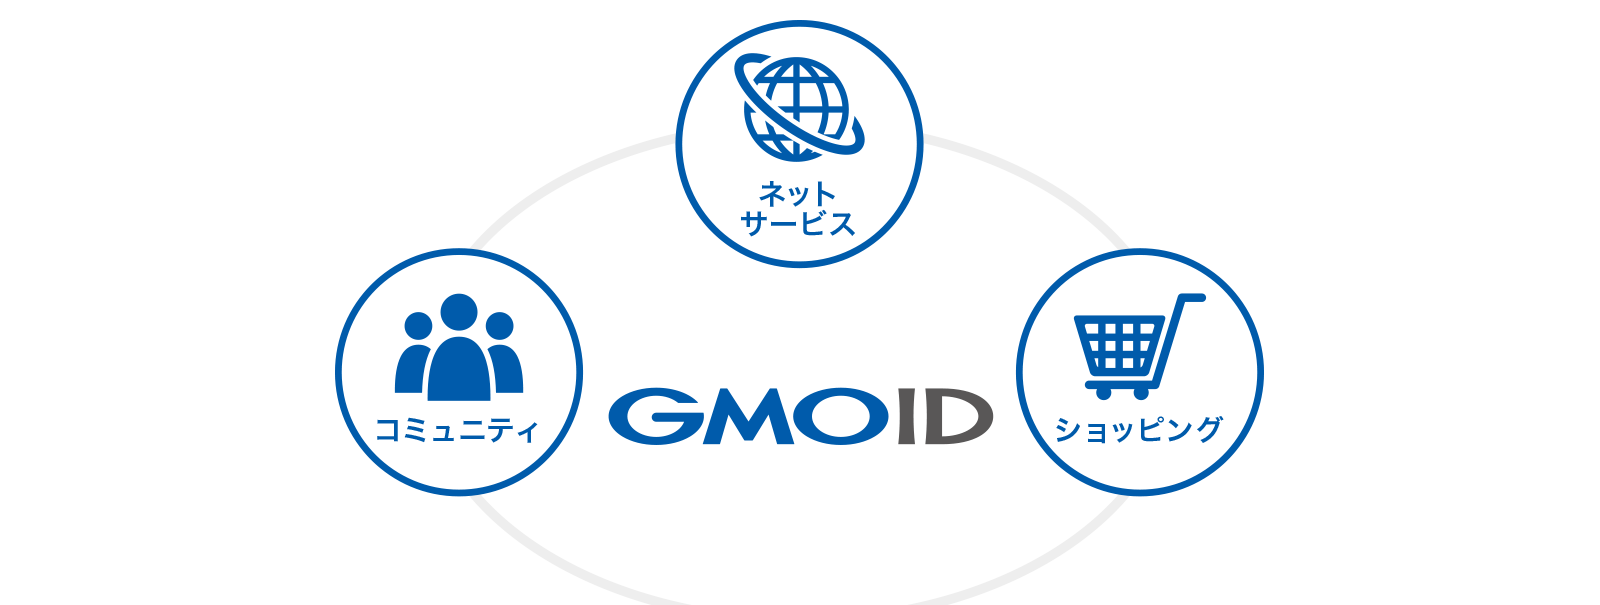 GMO IDでGMOインターネットサービス連携